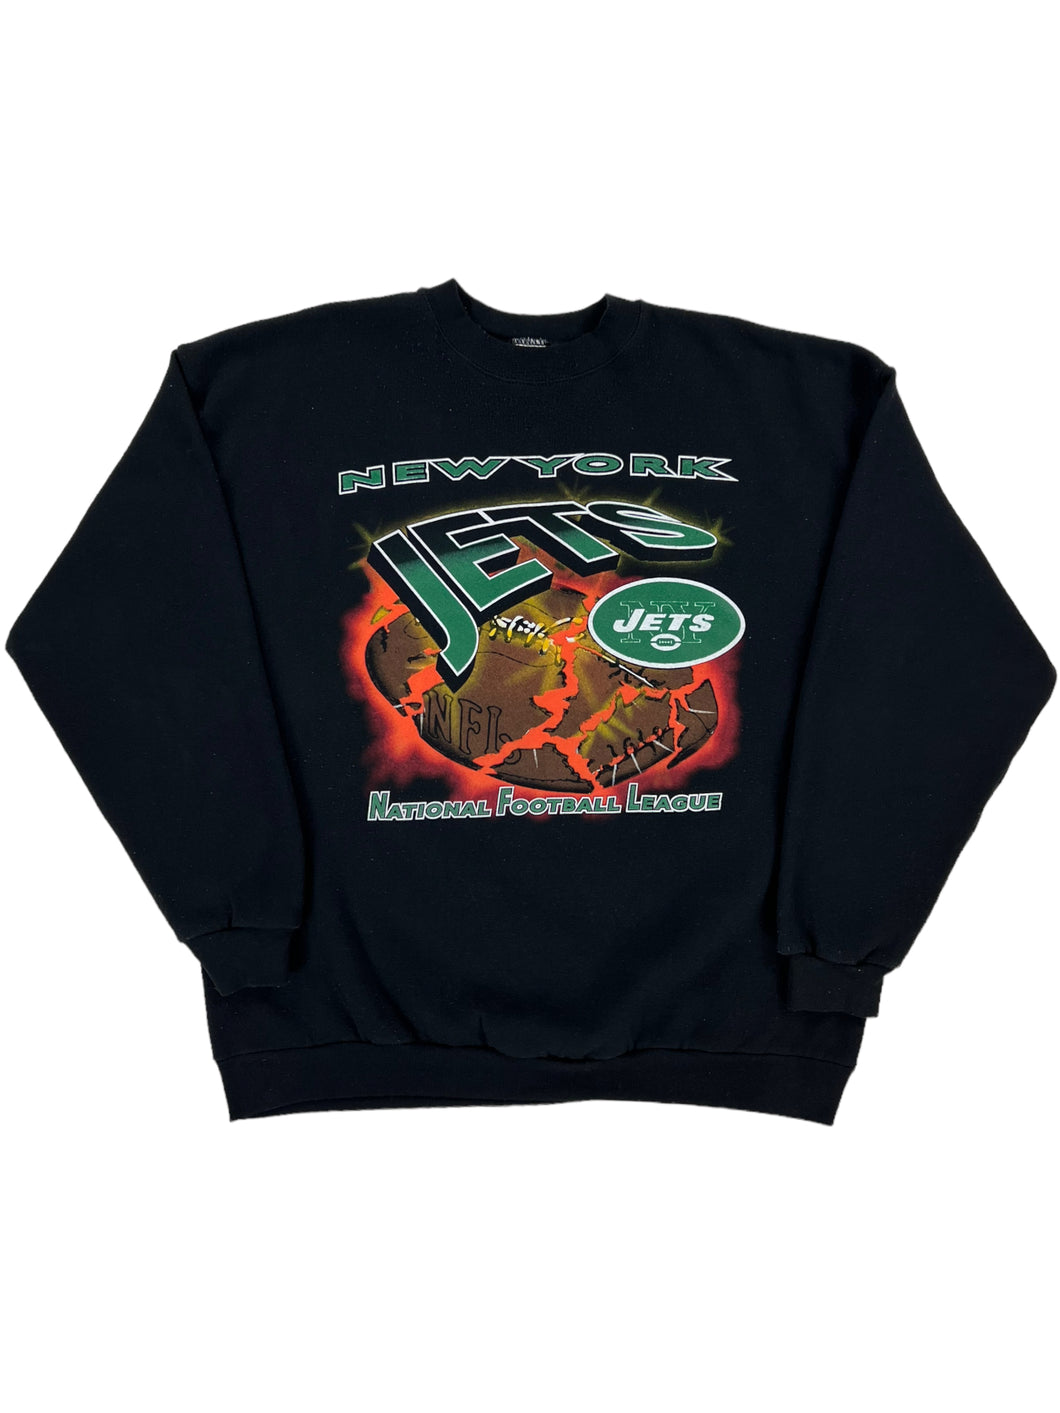 Vintage 90s Logo 7 New York NY Jets football explosion crewneck (XL)